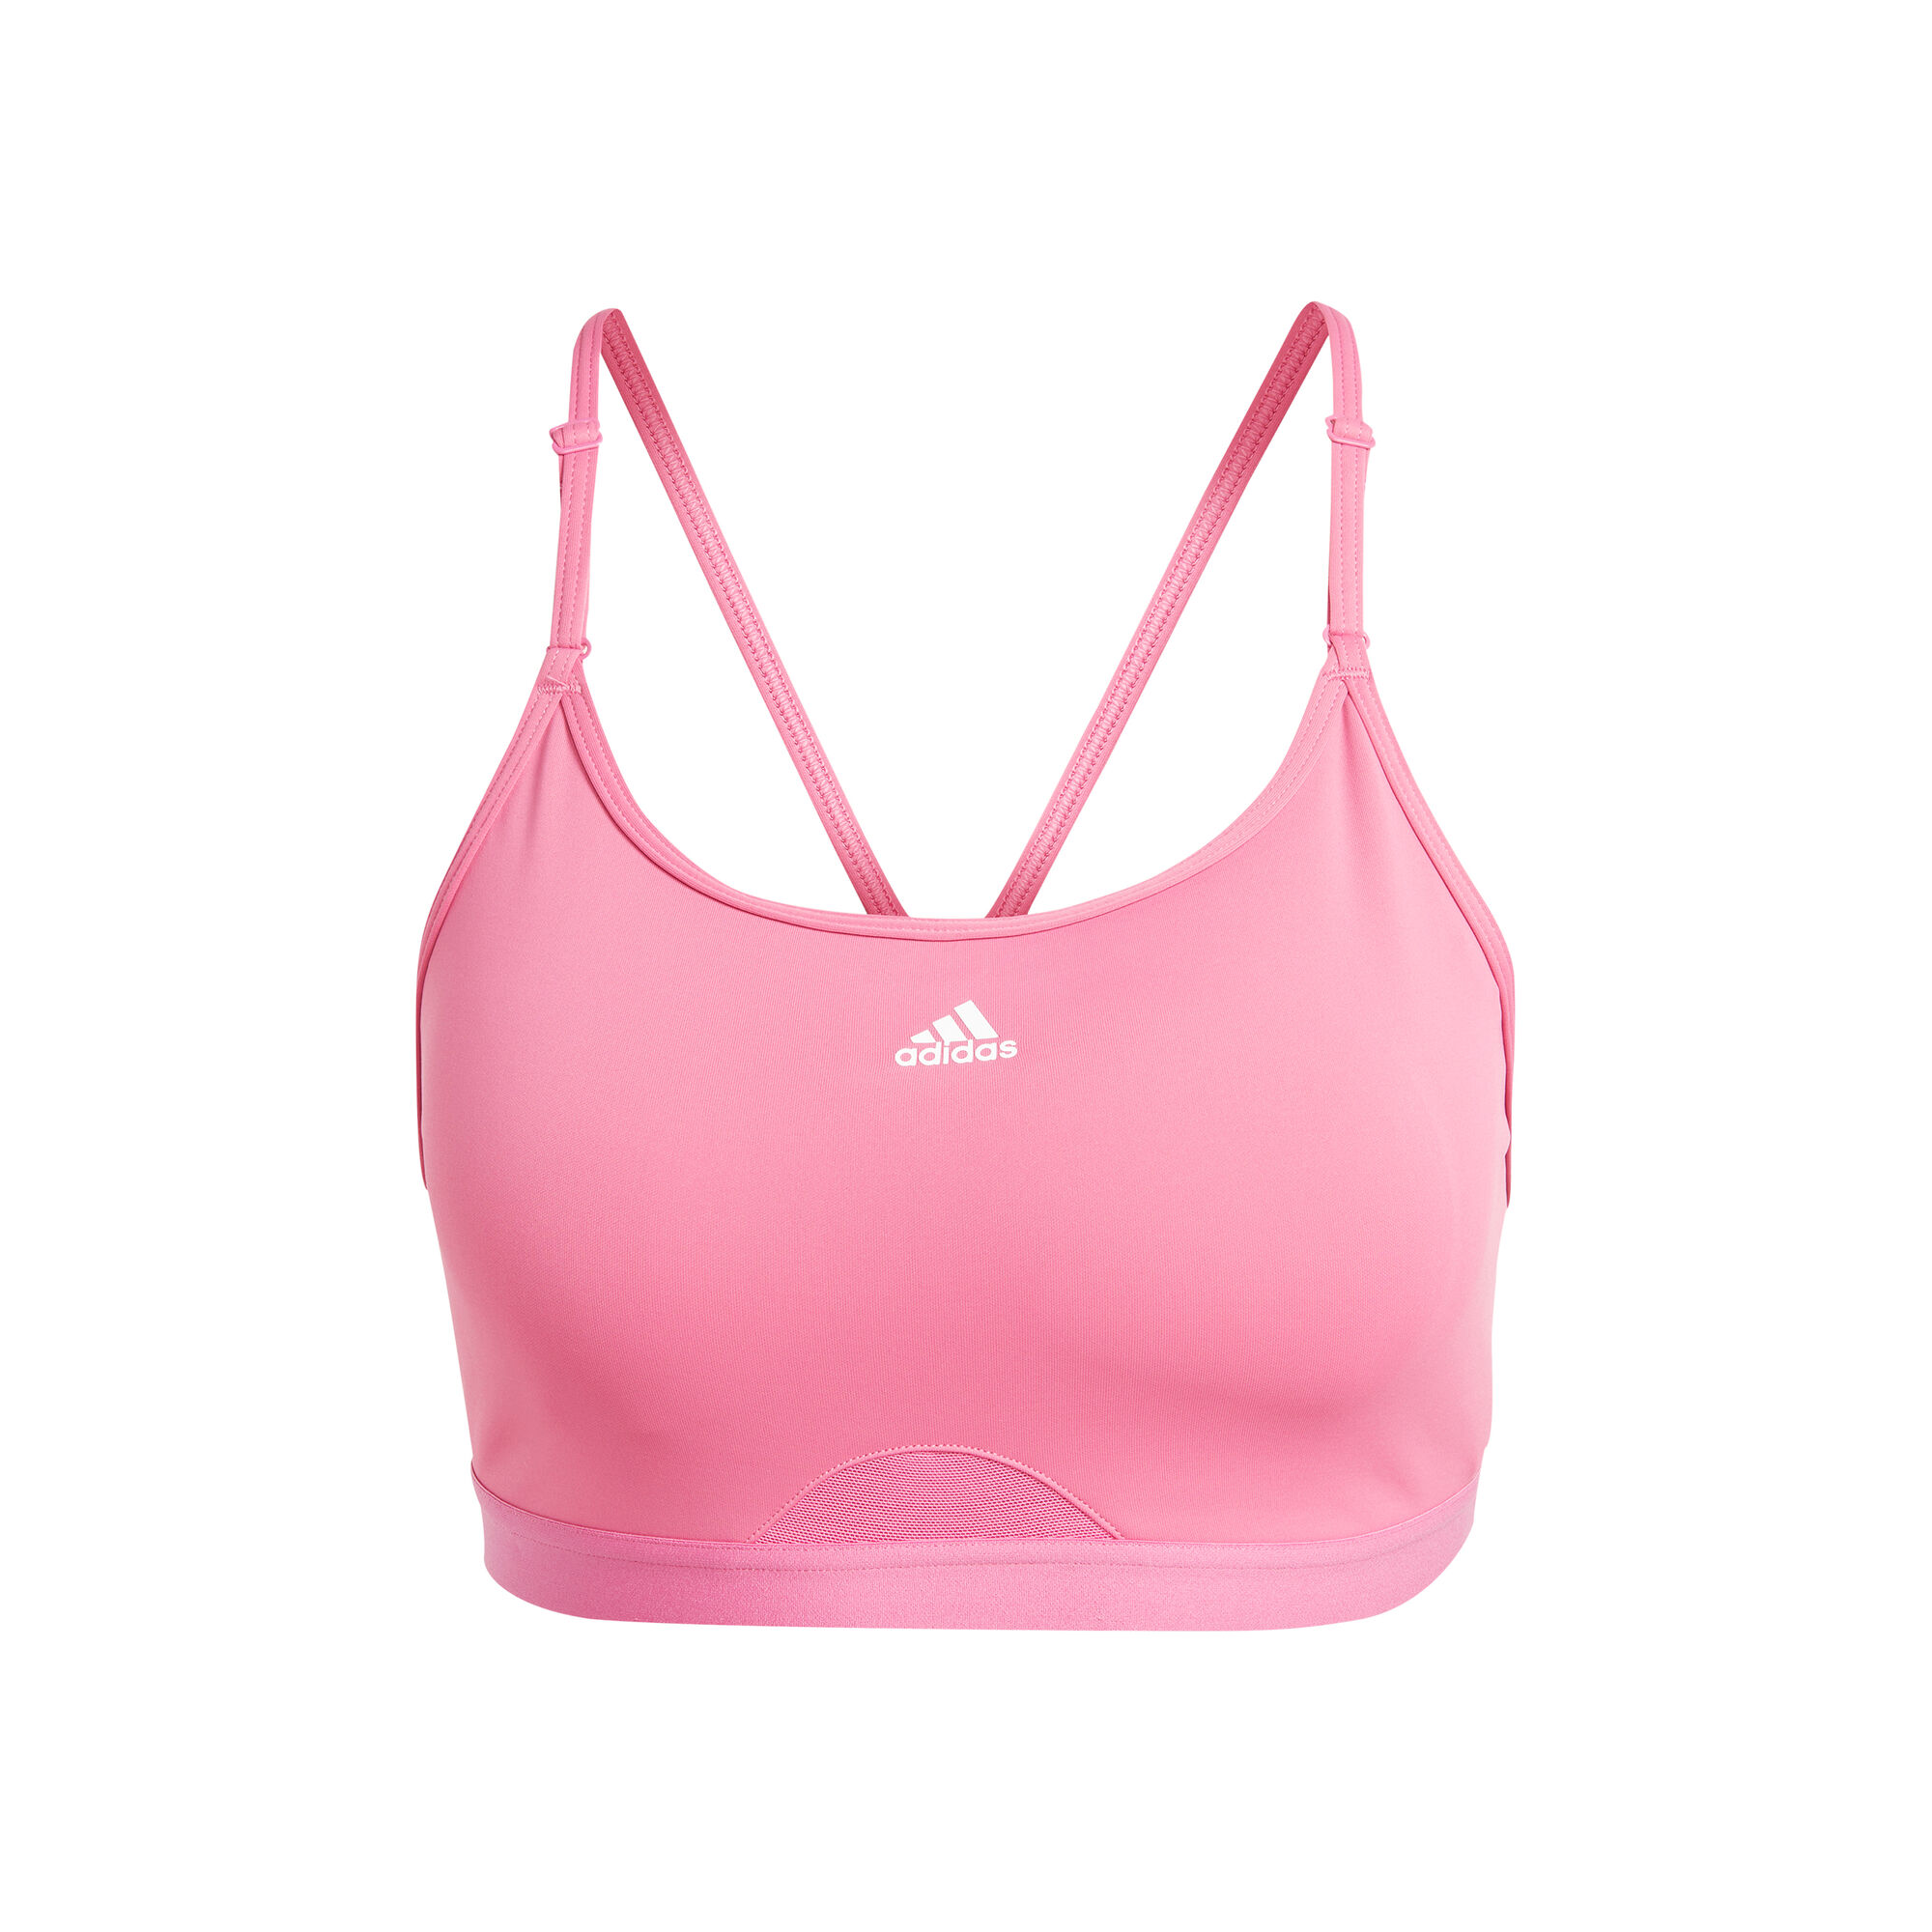 L. HIGH BRA High-impact sports bra - Women - Diadora Online Store CA